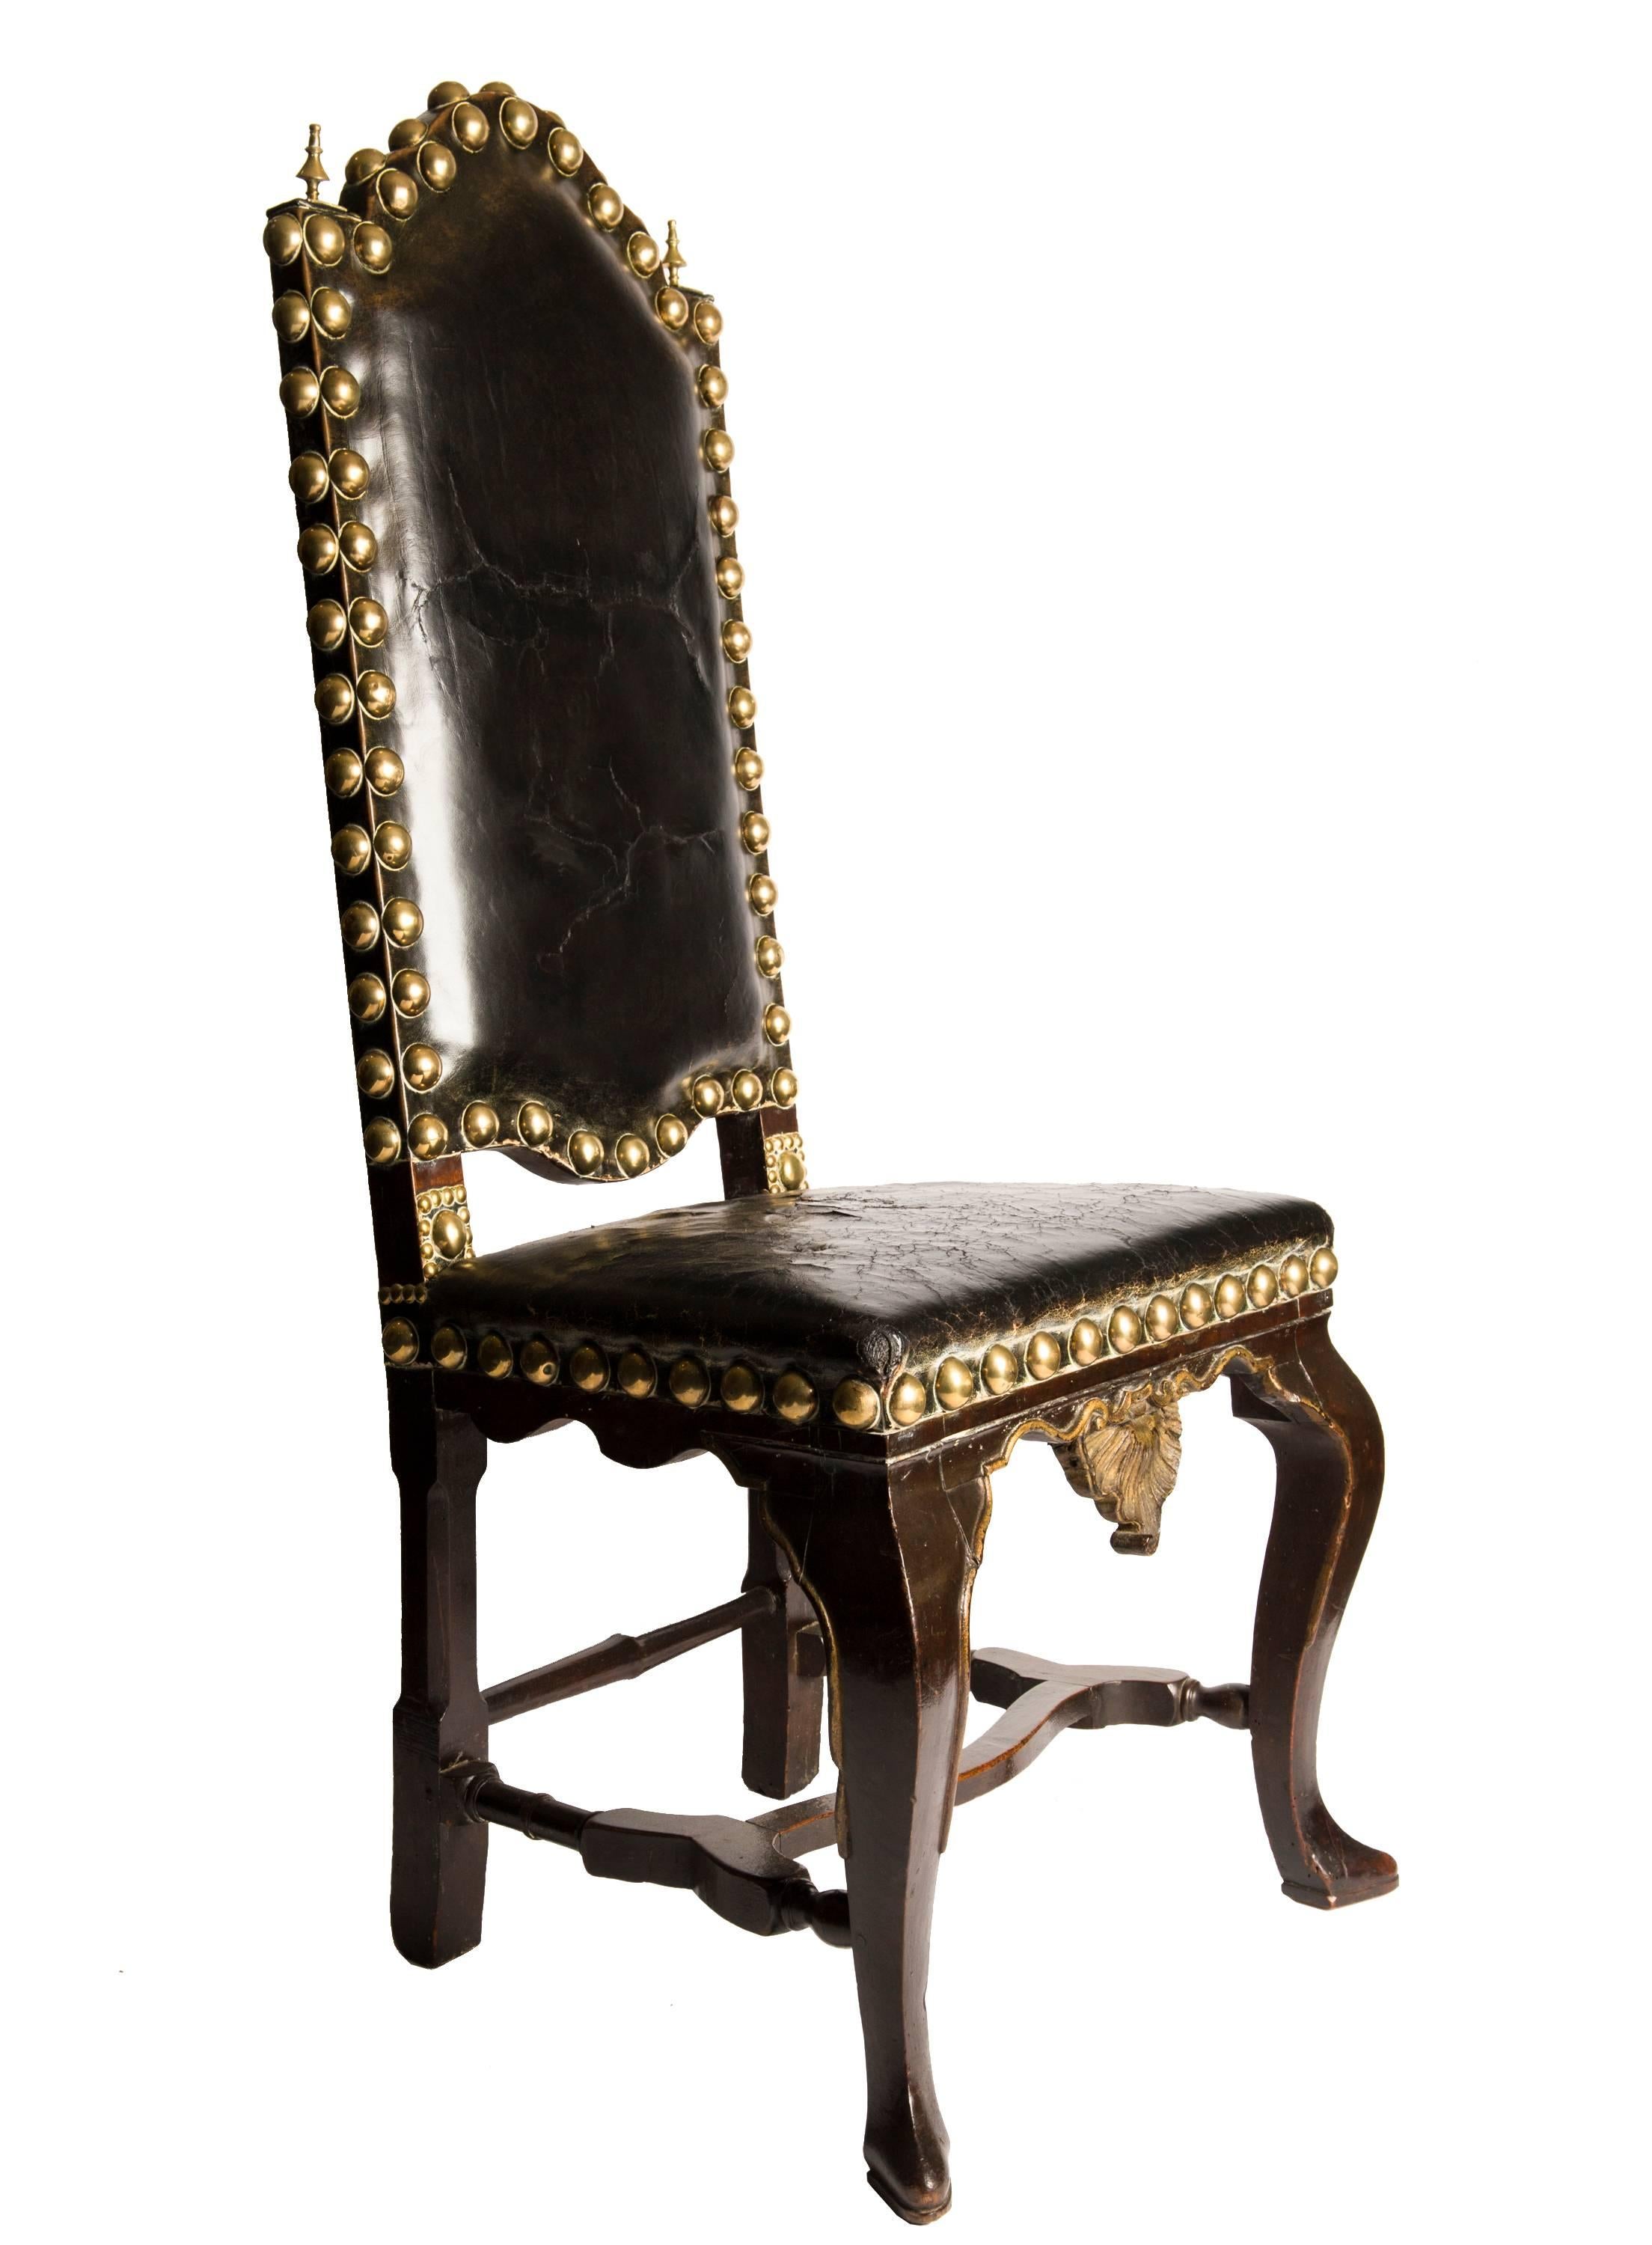 Pair of Black Leather Spanish Baroque Studded Walnut Side Chairs, 18th Century (18. Jahrhundert und früher)